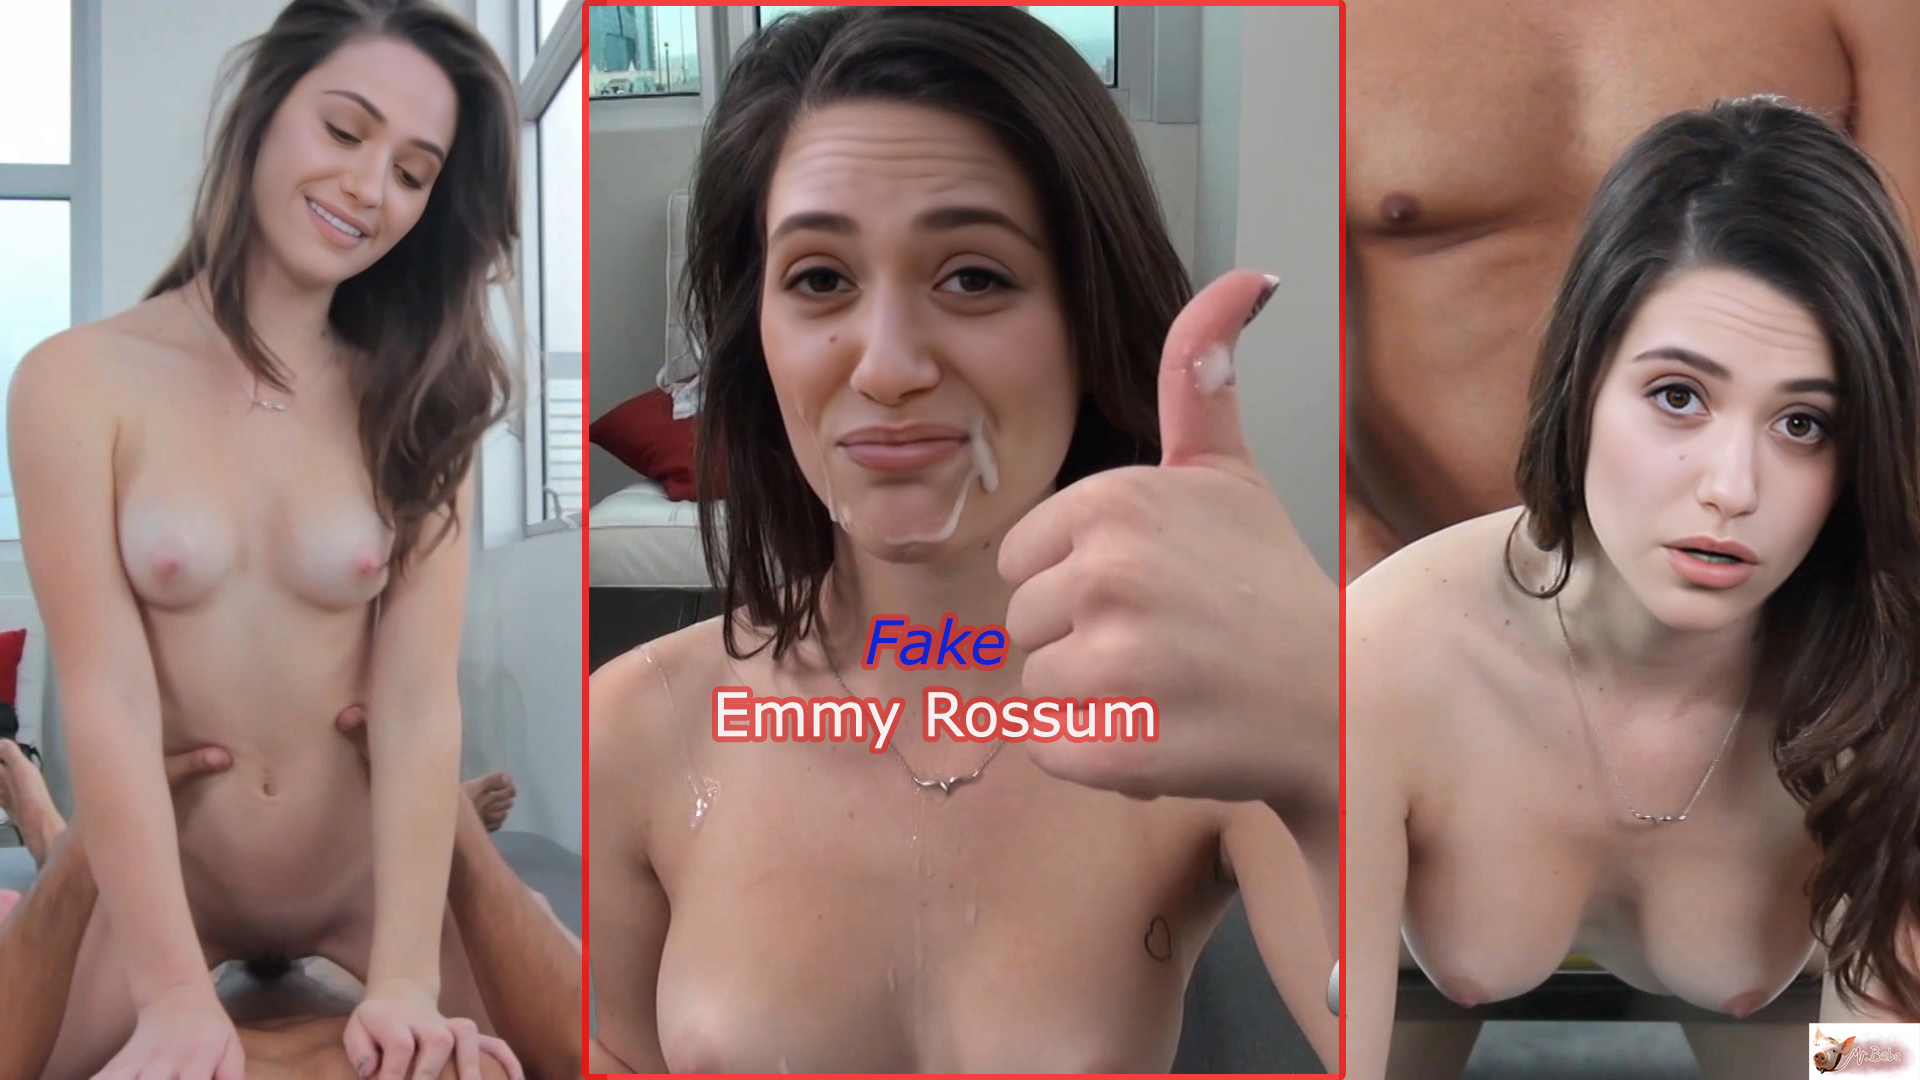 Emmy rossum deep fake